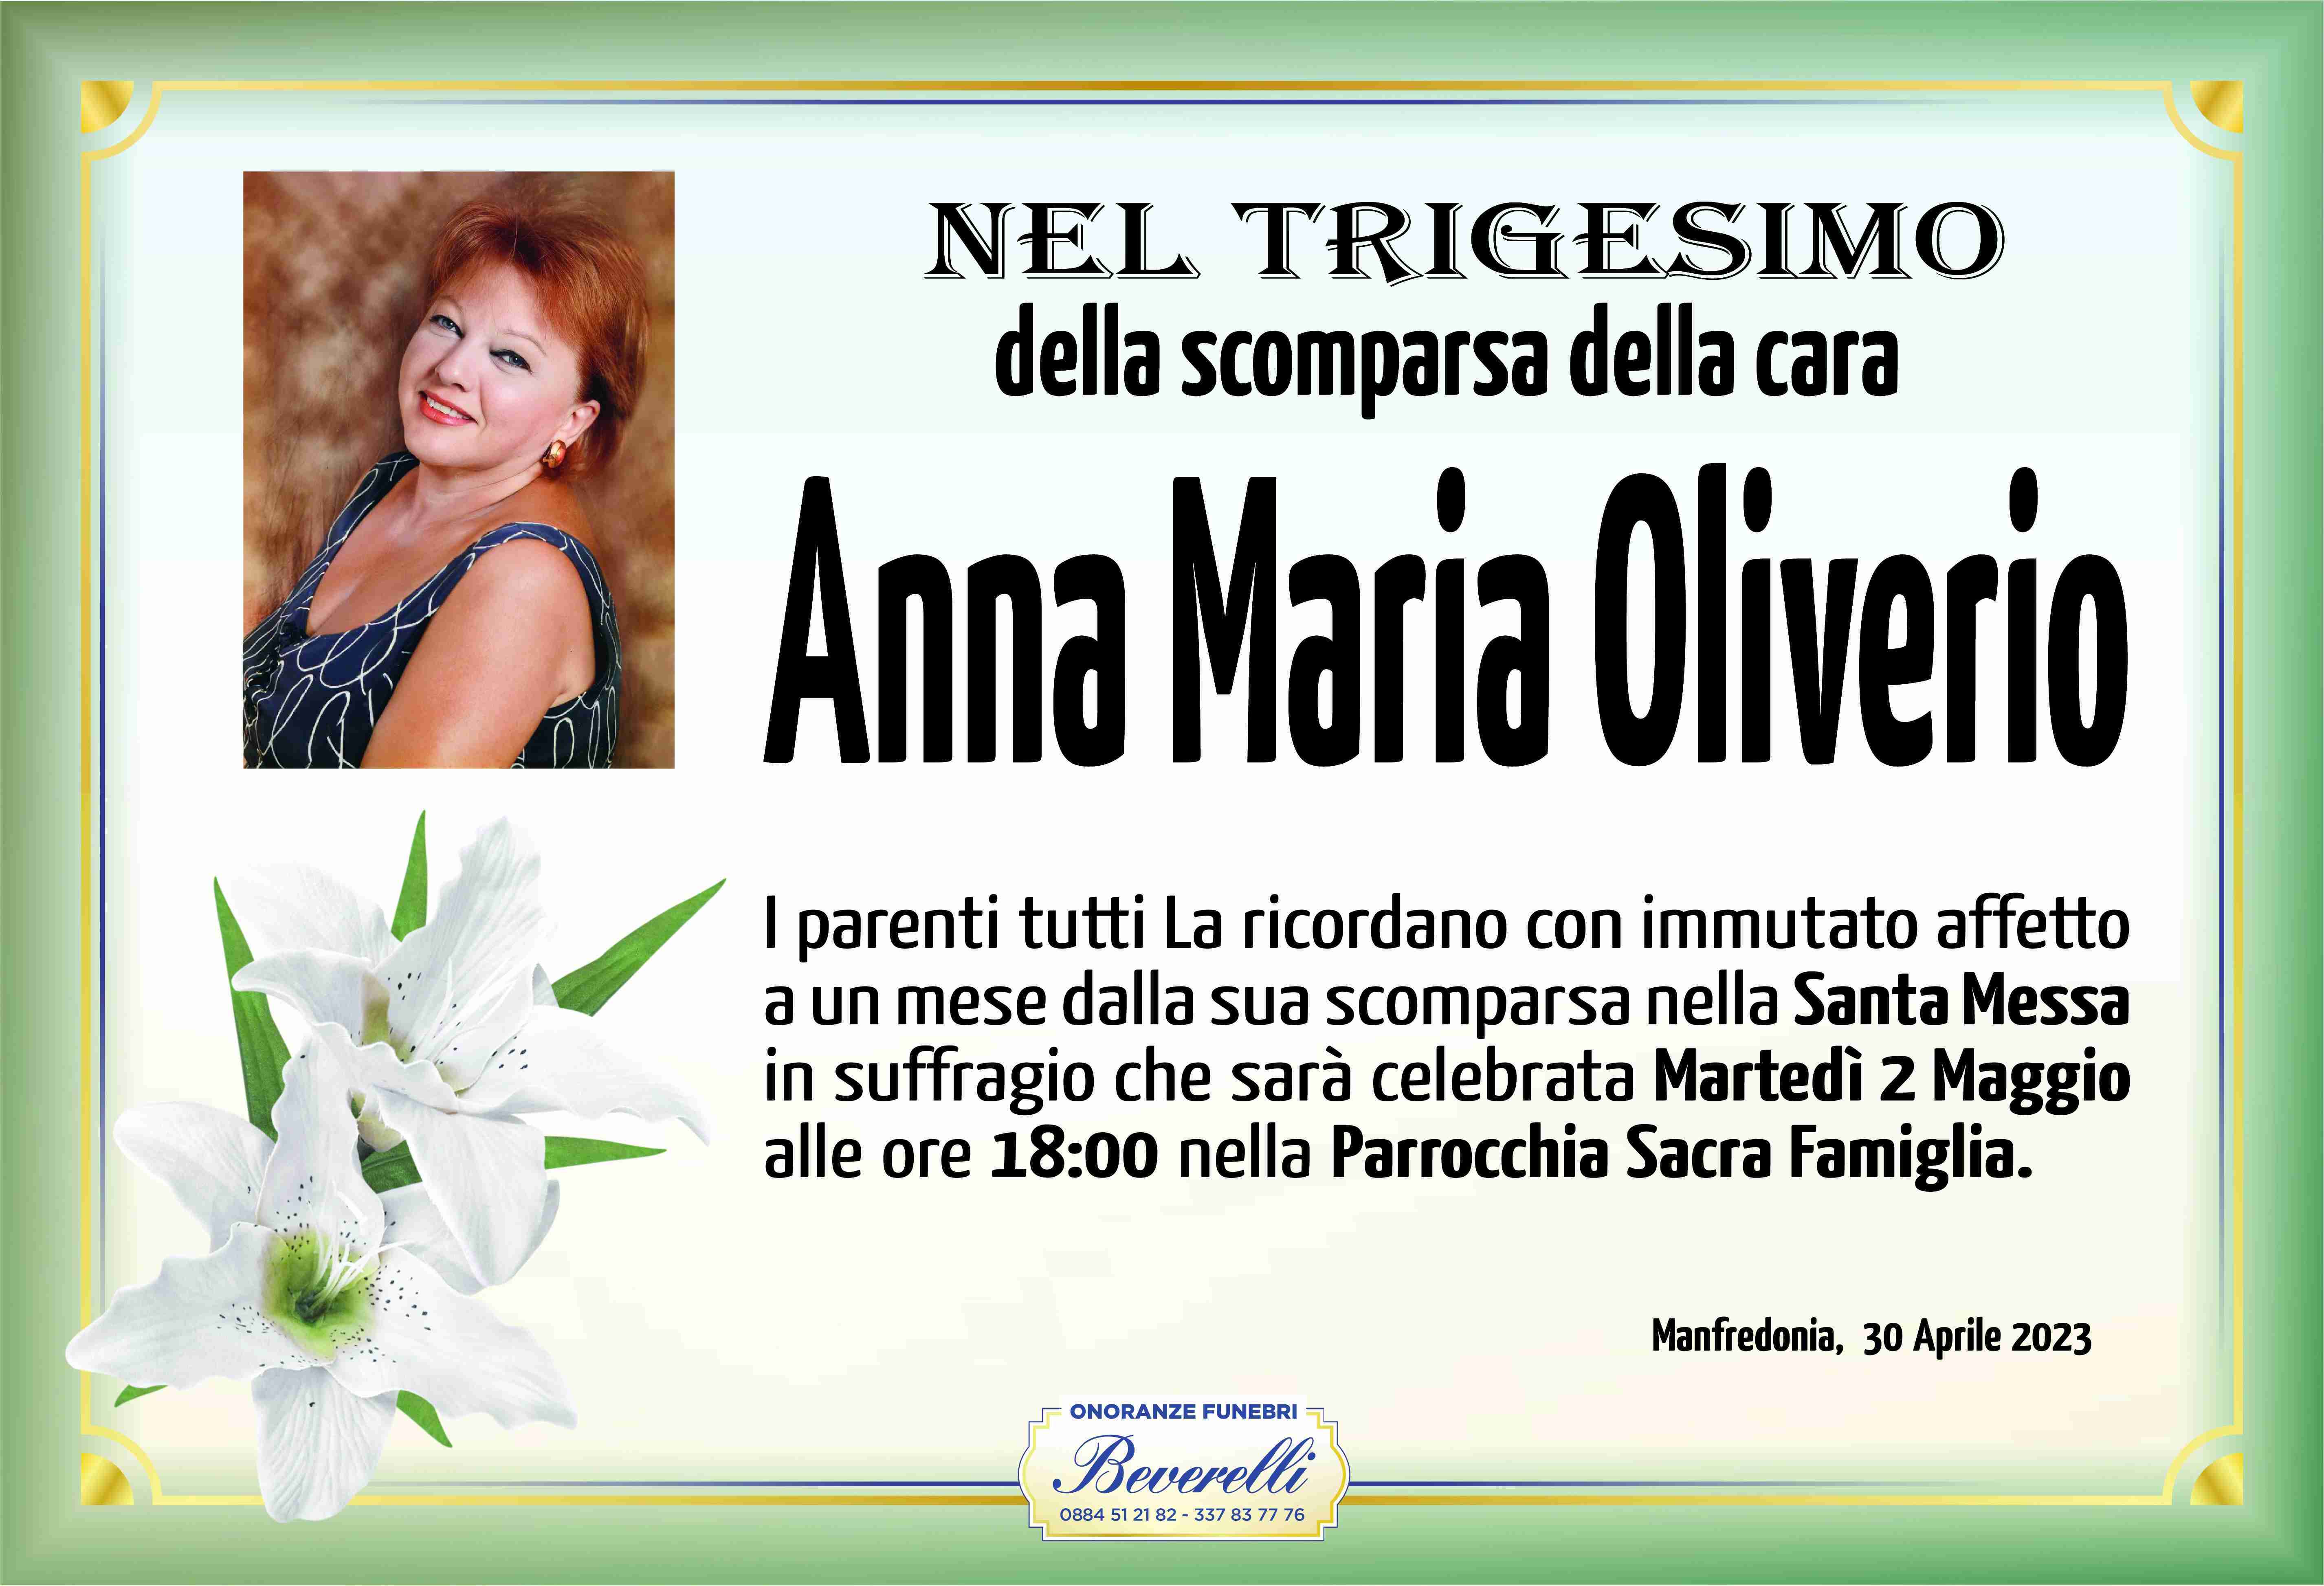 Anna Maria Oliverio